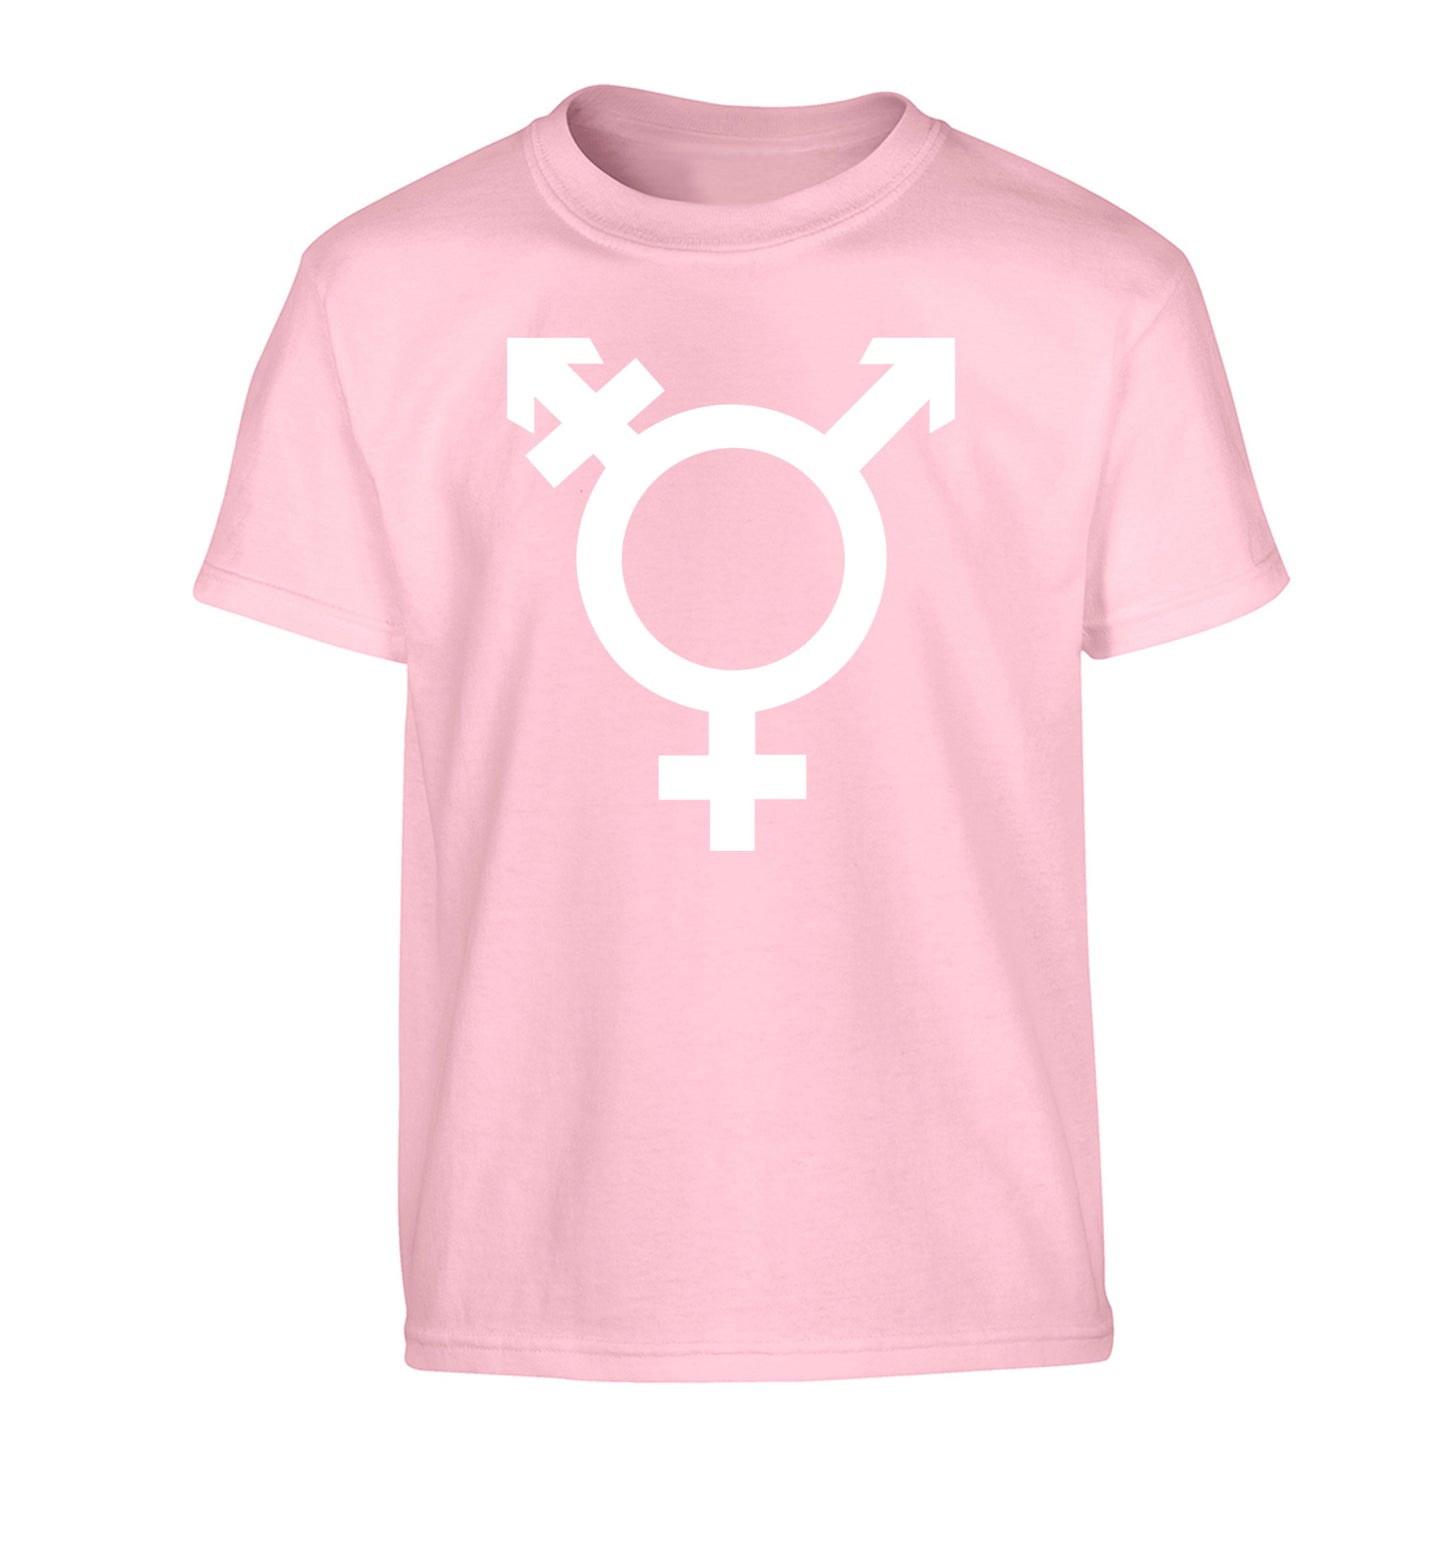 Gender neutral symbol large Children's light pink Tshirt 12-14 Years